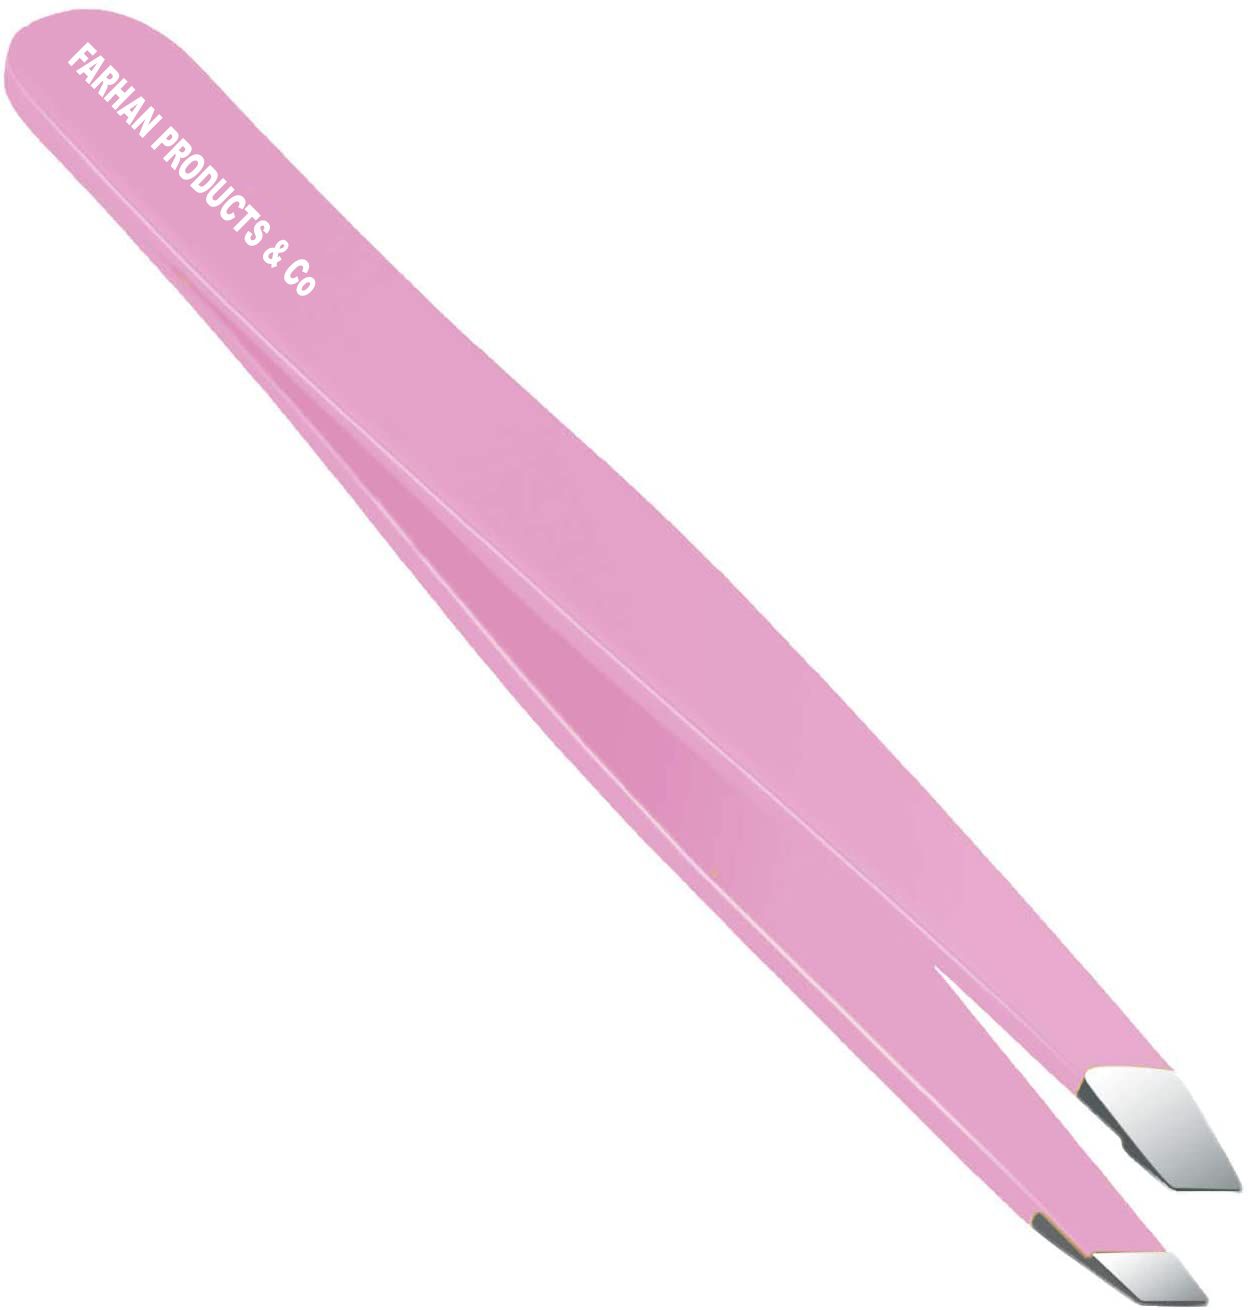 Stainless Steel Slant Tip Tweezers Professional Eyebrow & Eyelash Tweezers for Your Daily Beauty Routine ( Pink )